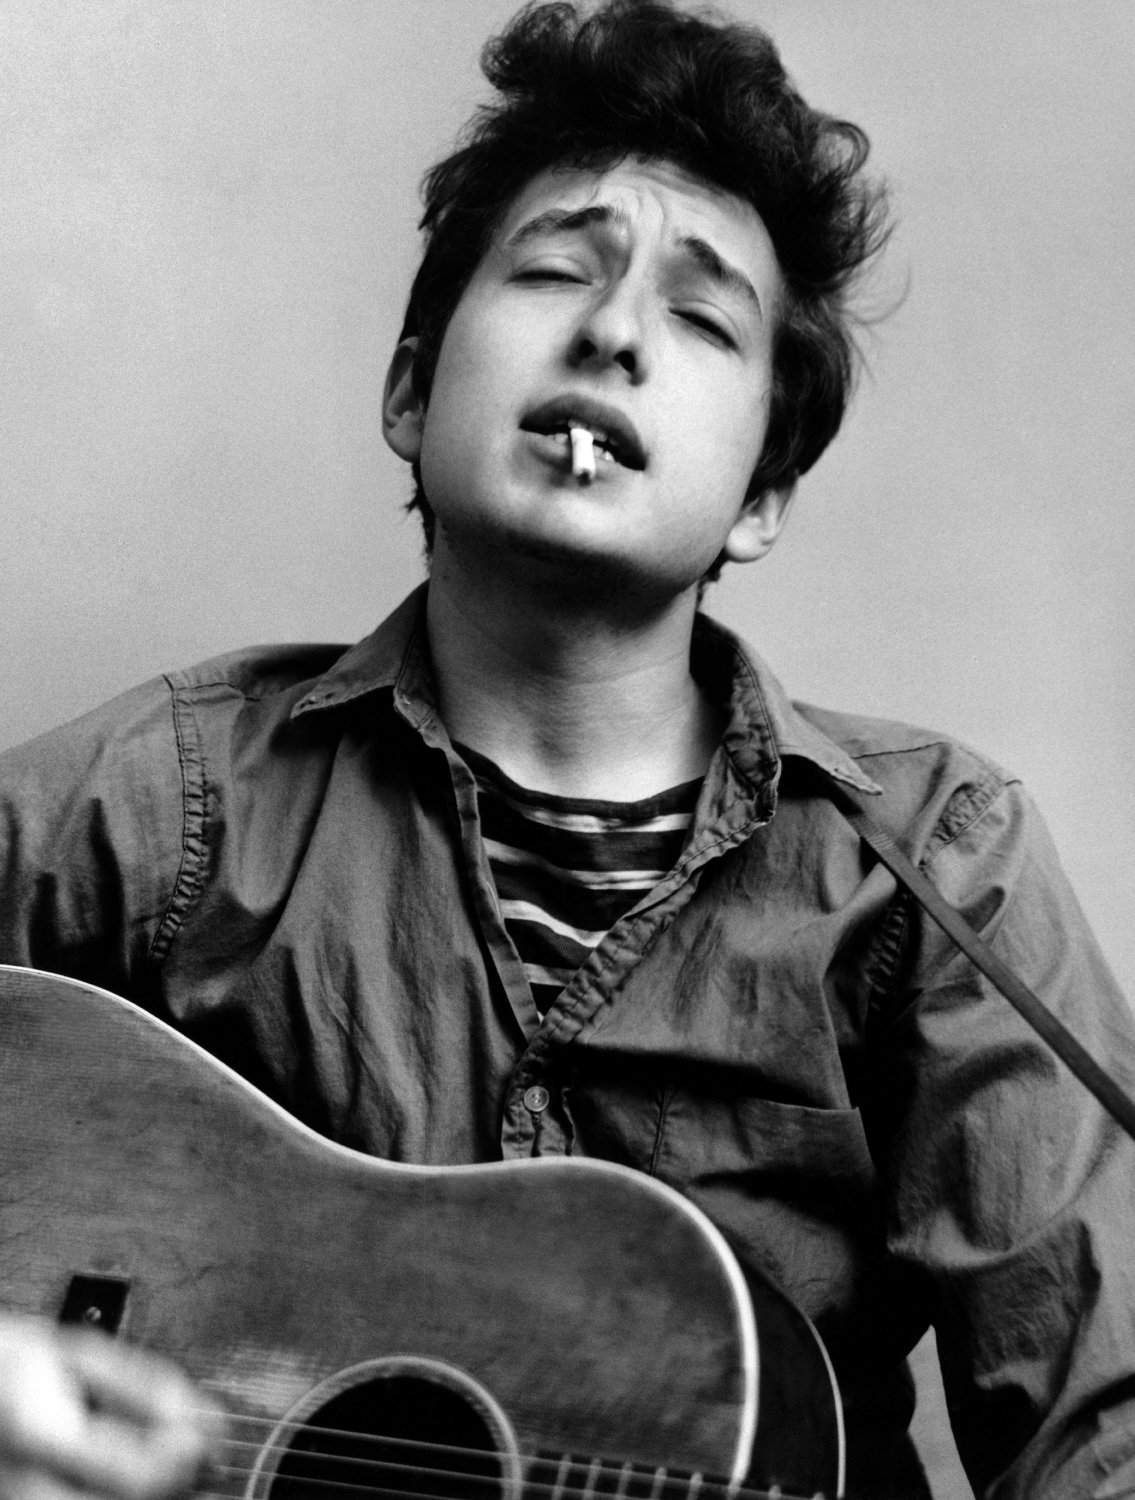 Bob Dylan  18"x28" (45cm/70cm) Poster